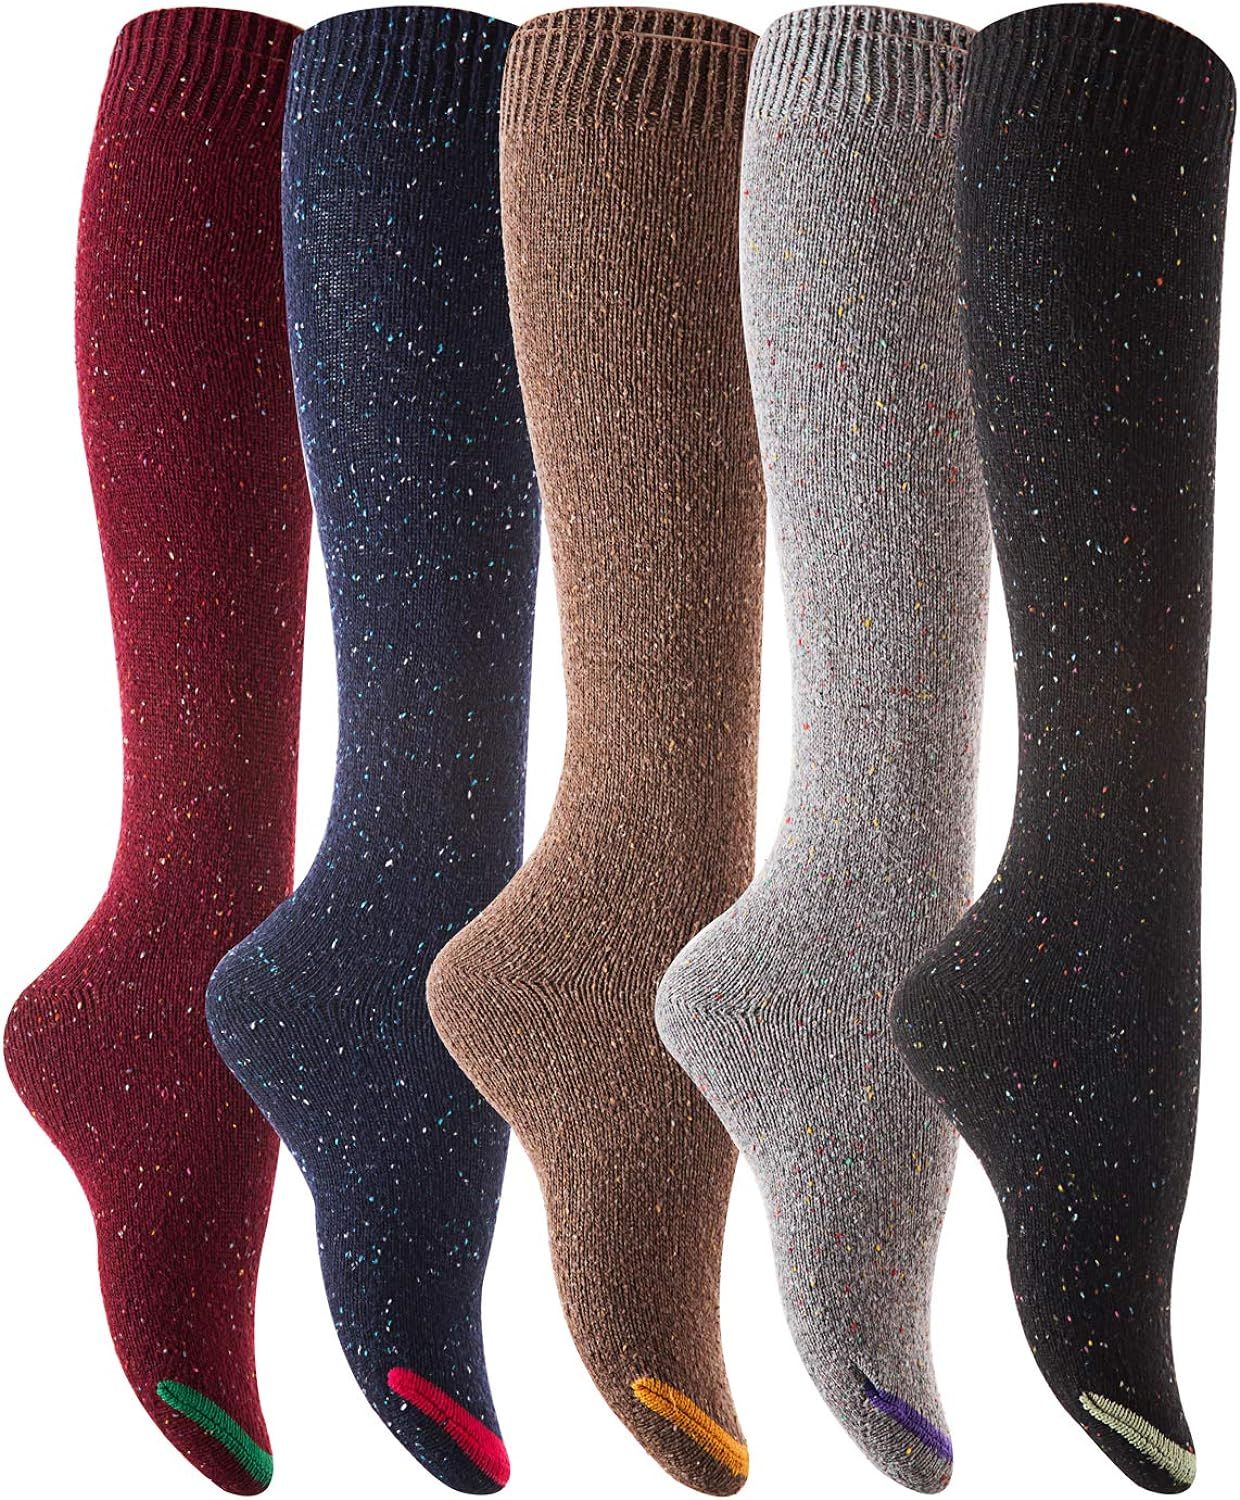 Lian LifeStyle Women's 5 Pairs Cute Knee High Cotton Socks Size 6-9 L158212-5p | Amazon (US)